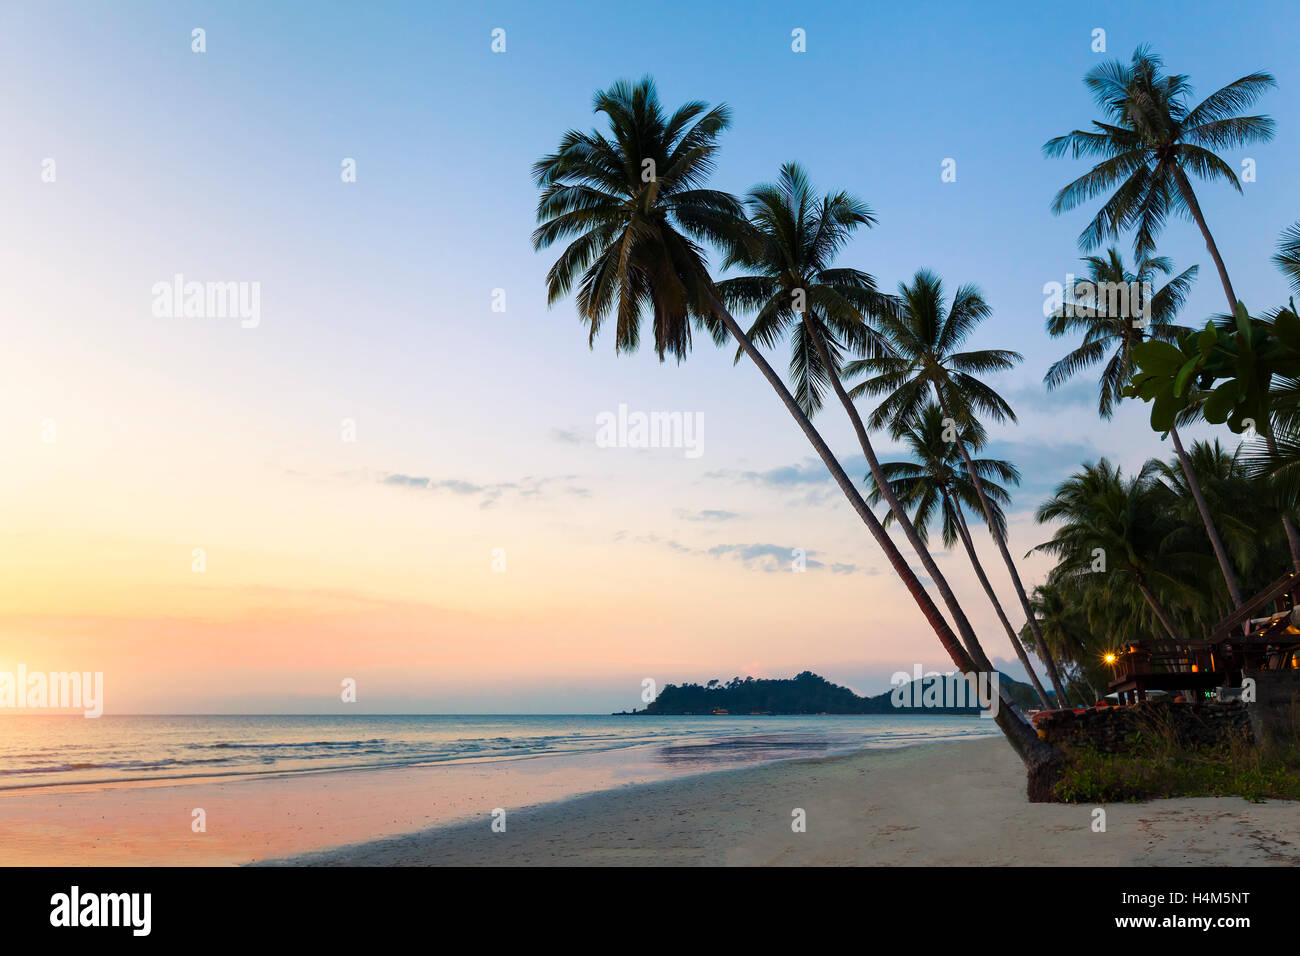 Beautiful tropical beach landscape, palm trees, sea, resort and sunset Stock Photo